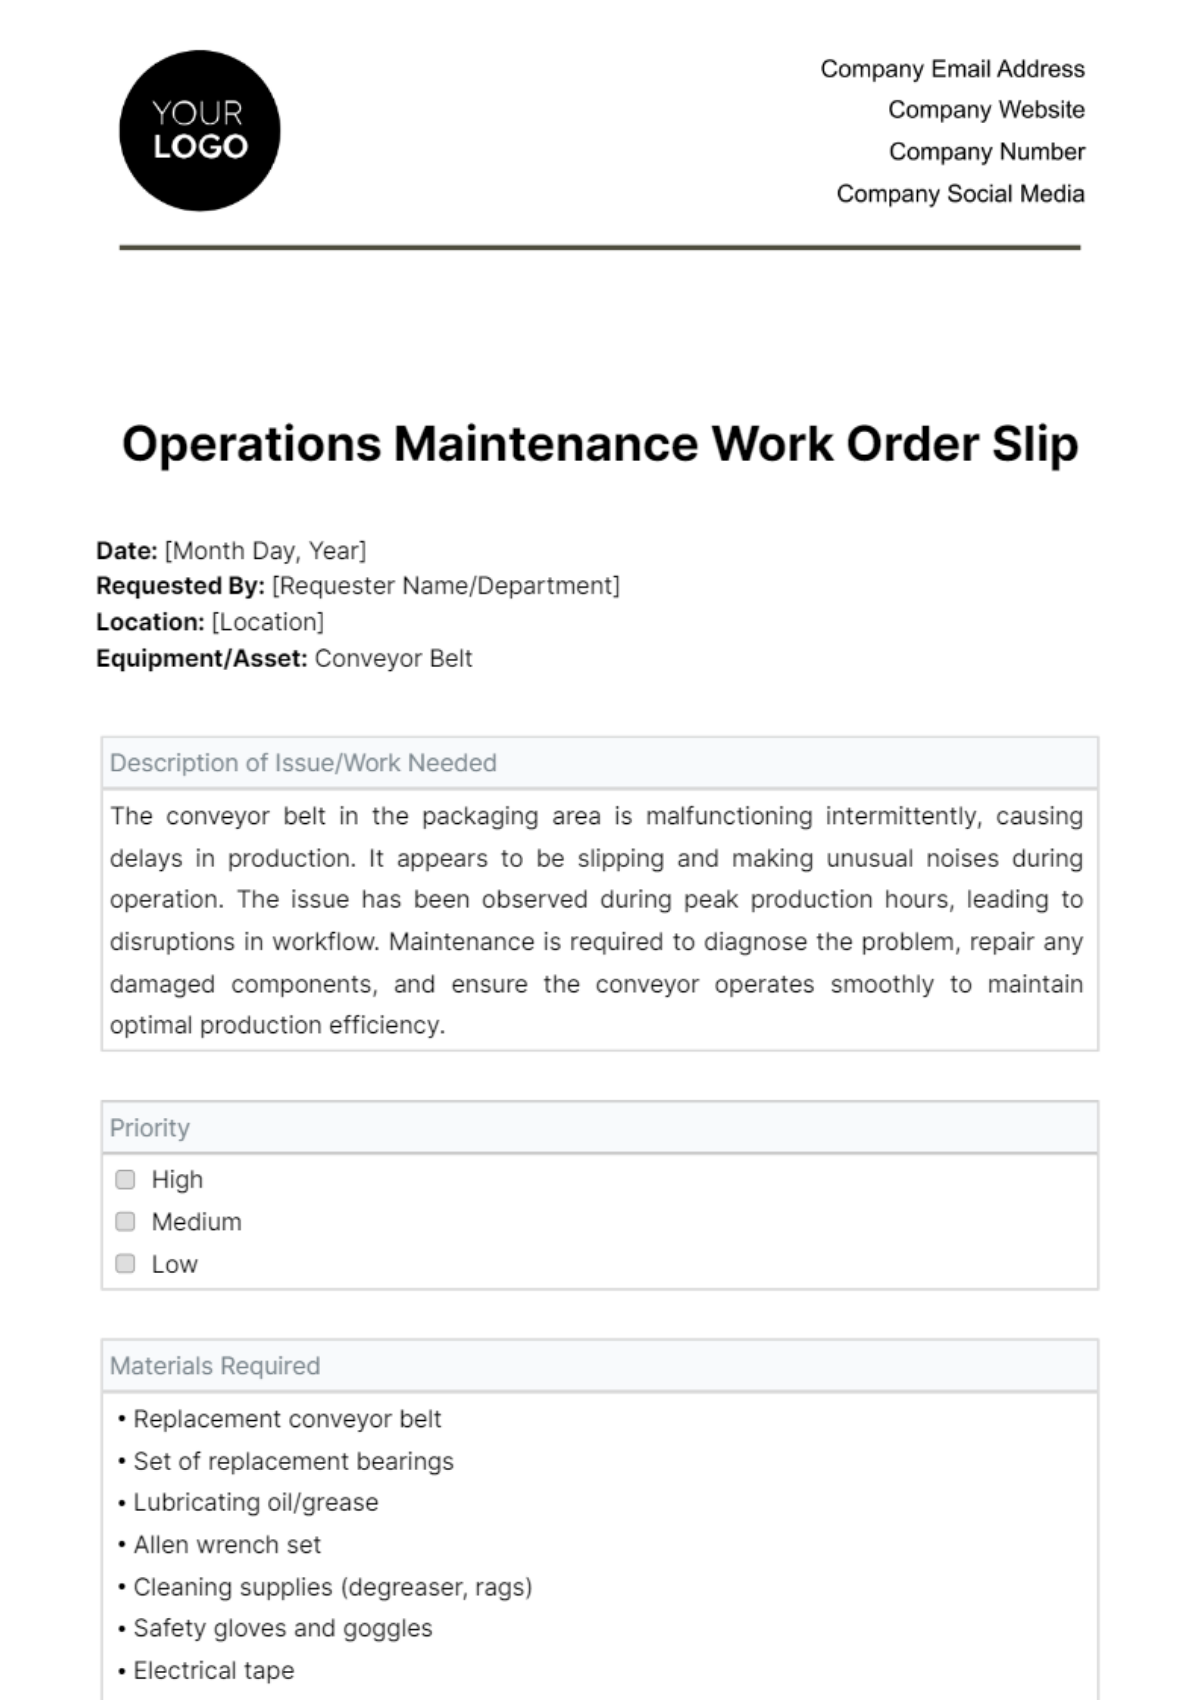 Operations Maintenance Work Order Slip Template